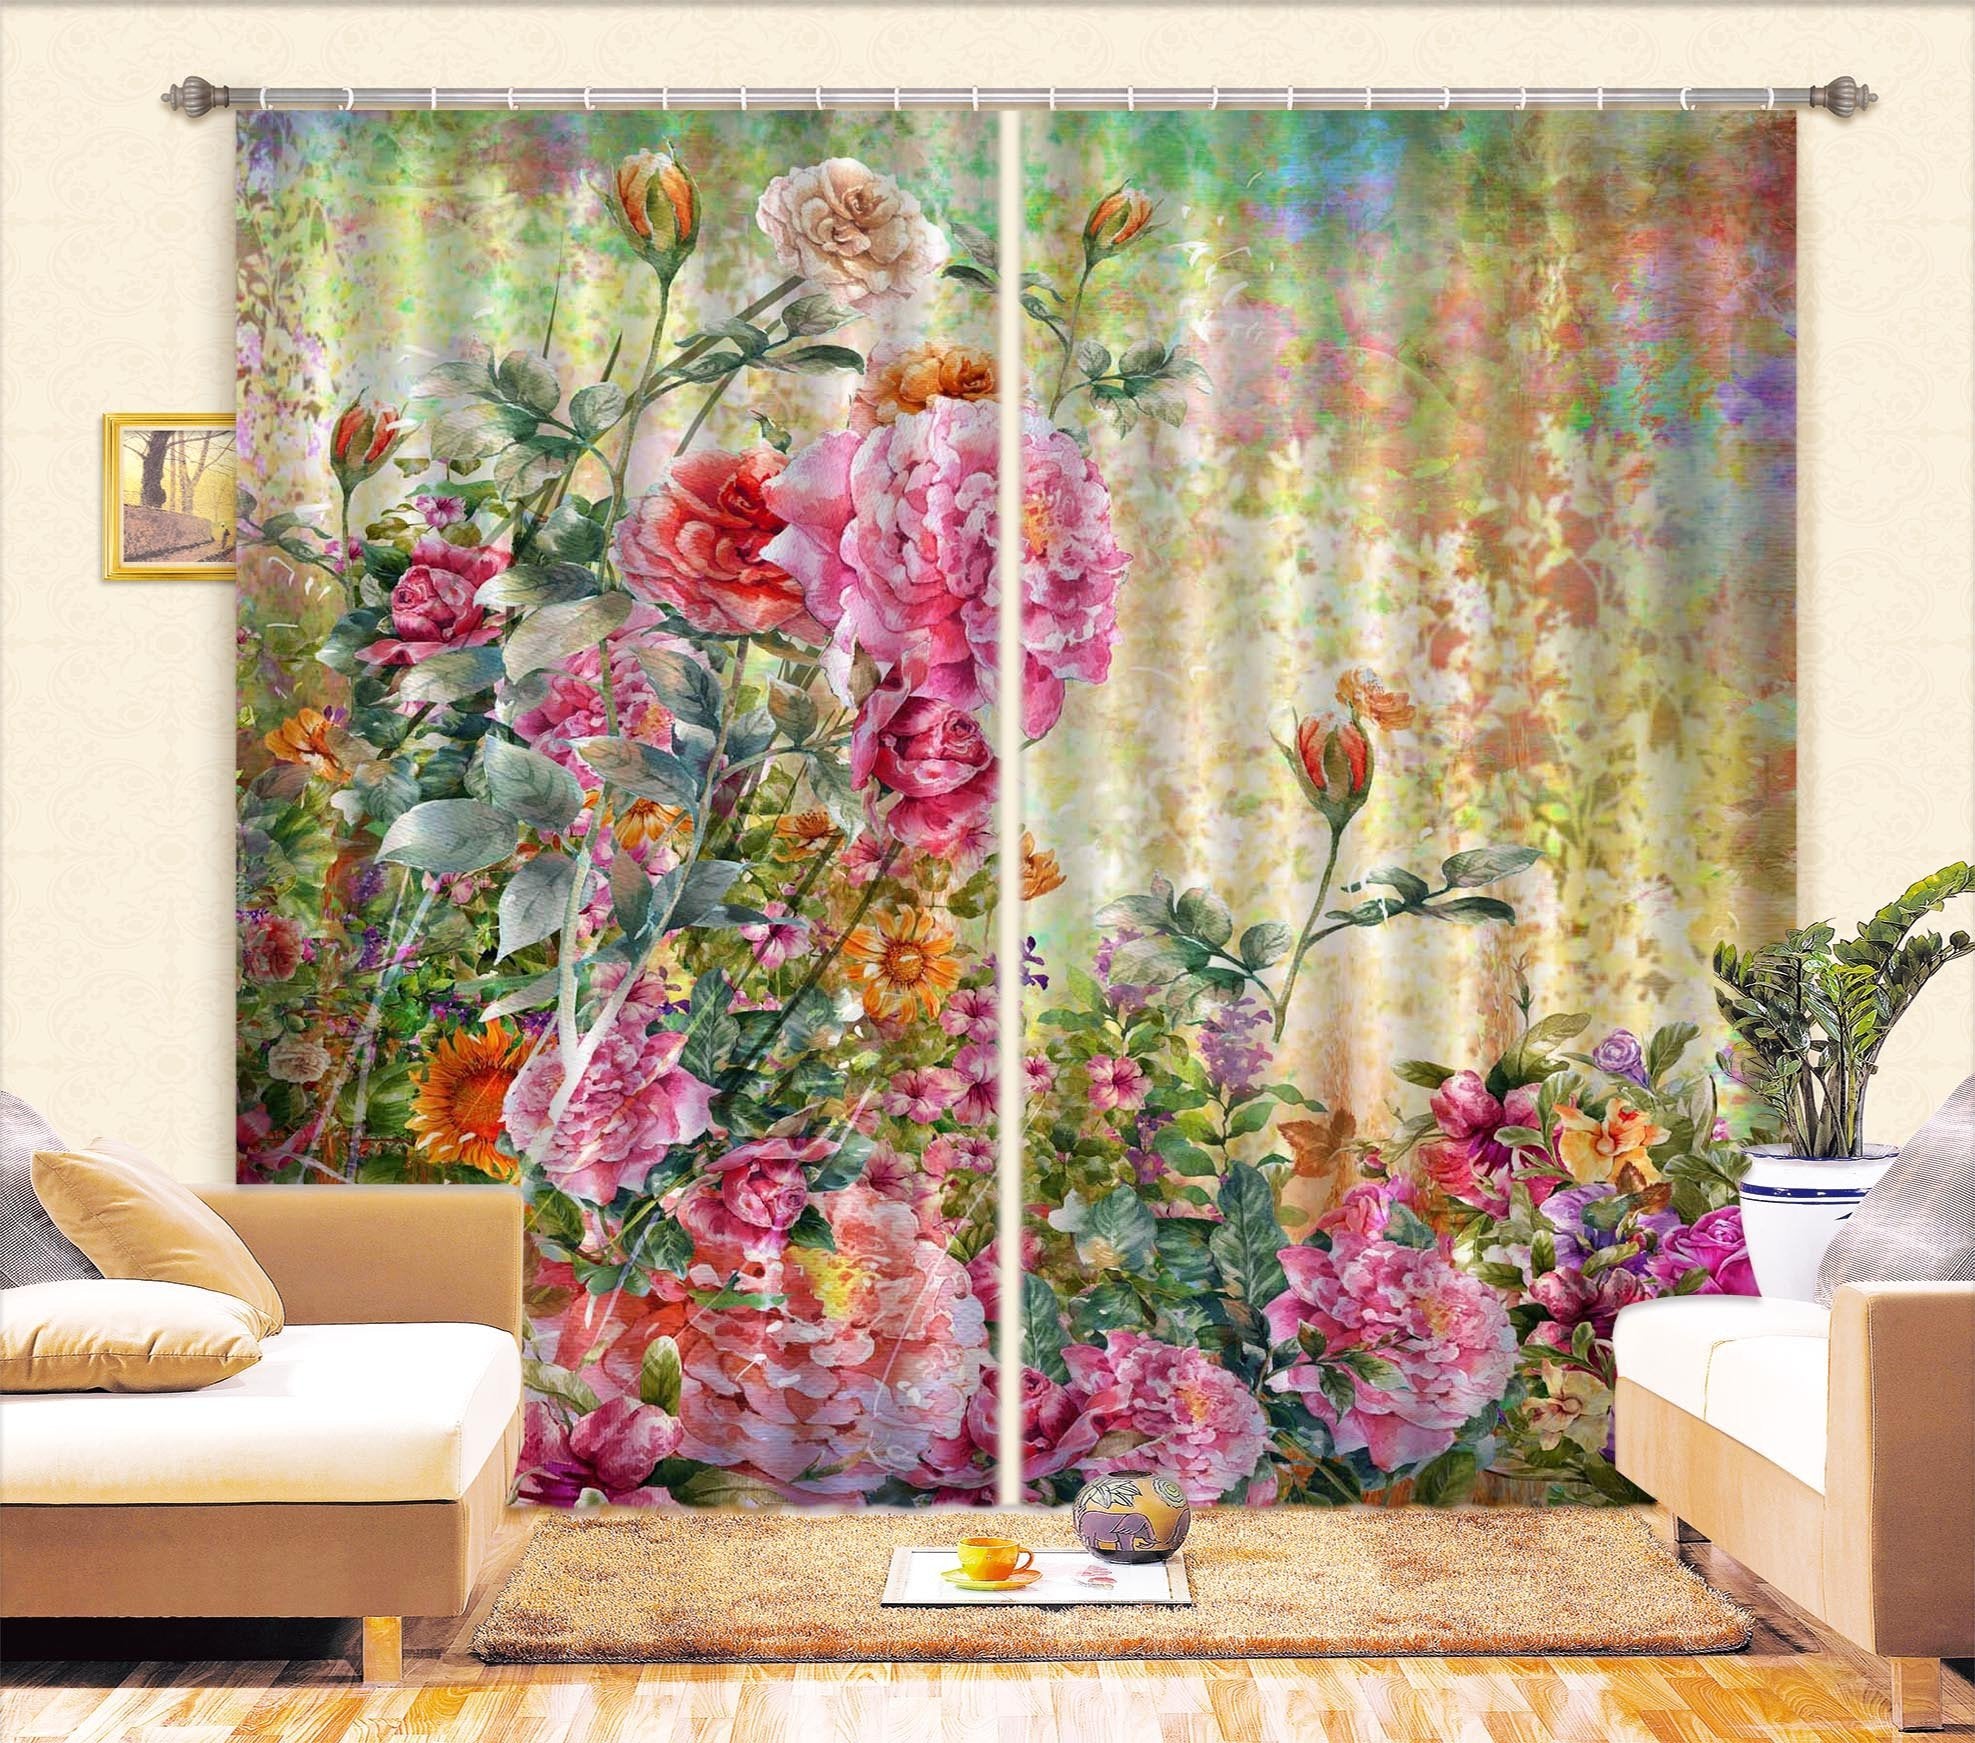 3D Lush Flowers 540 Curtains Drapes Wallpaper AJ Wallpaper 